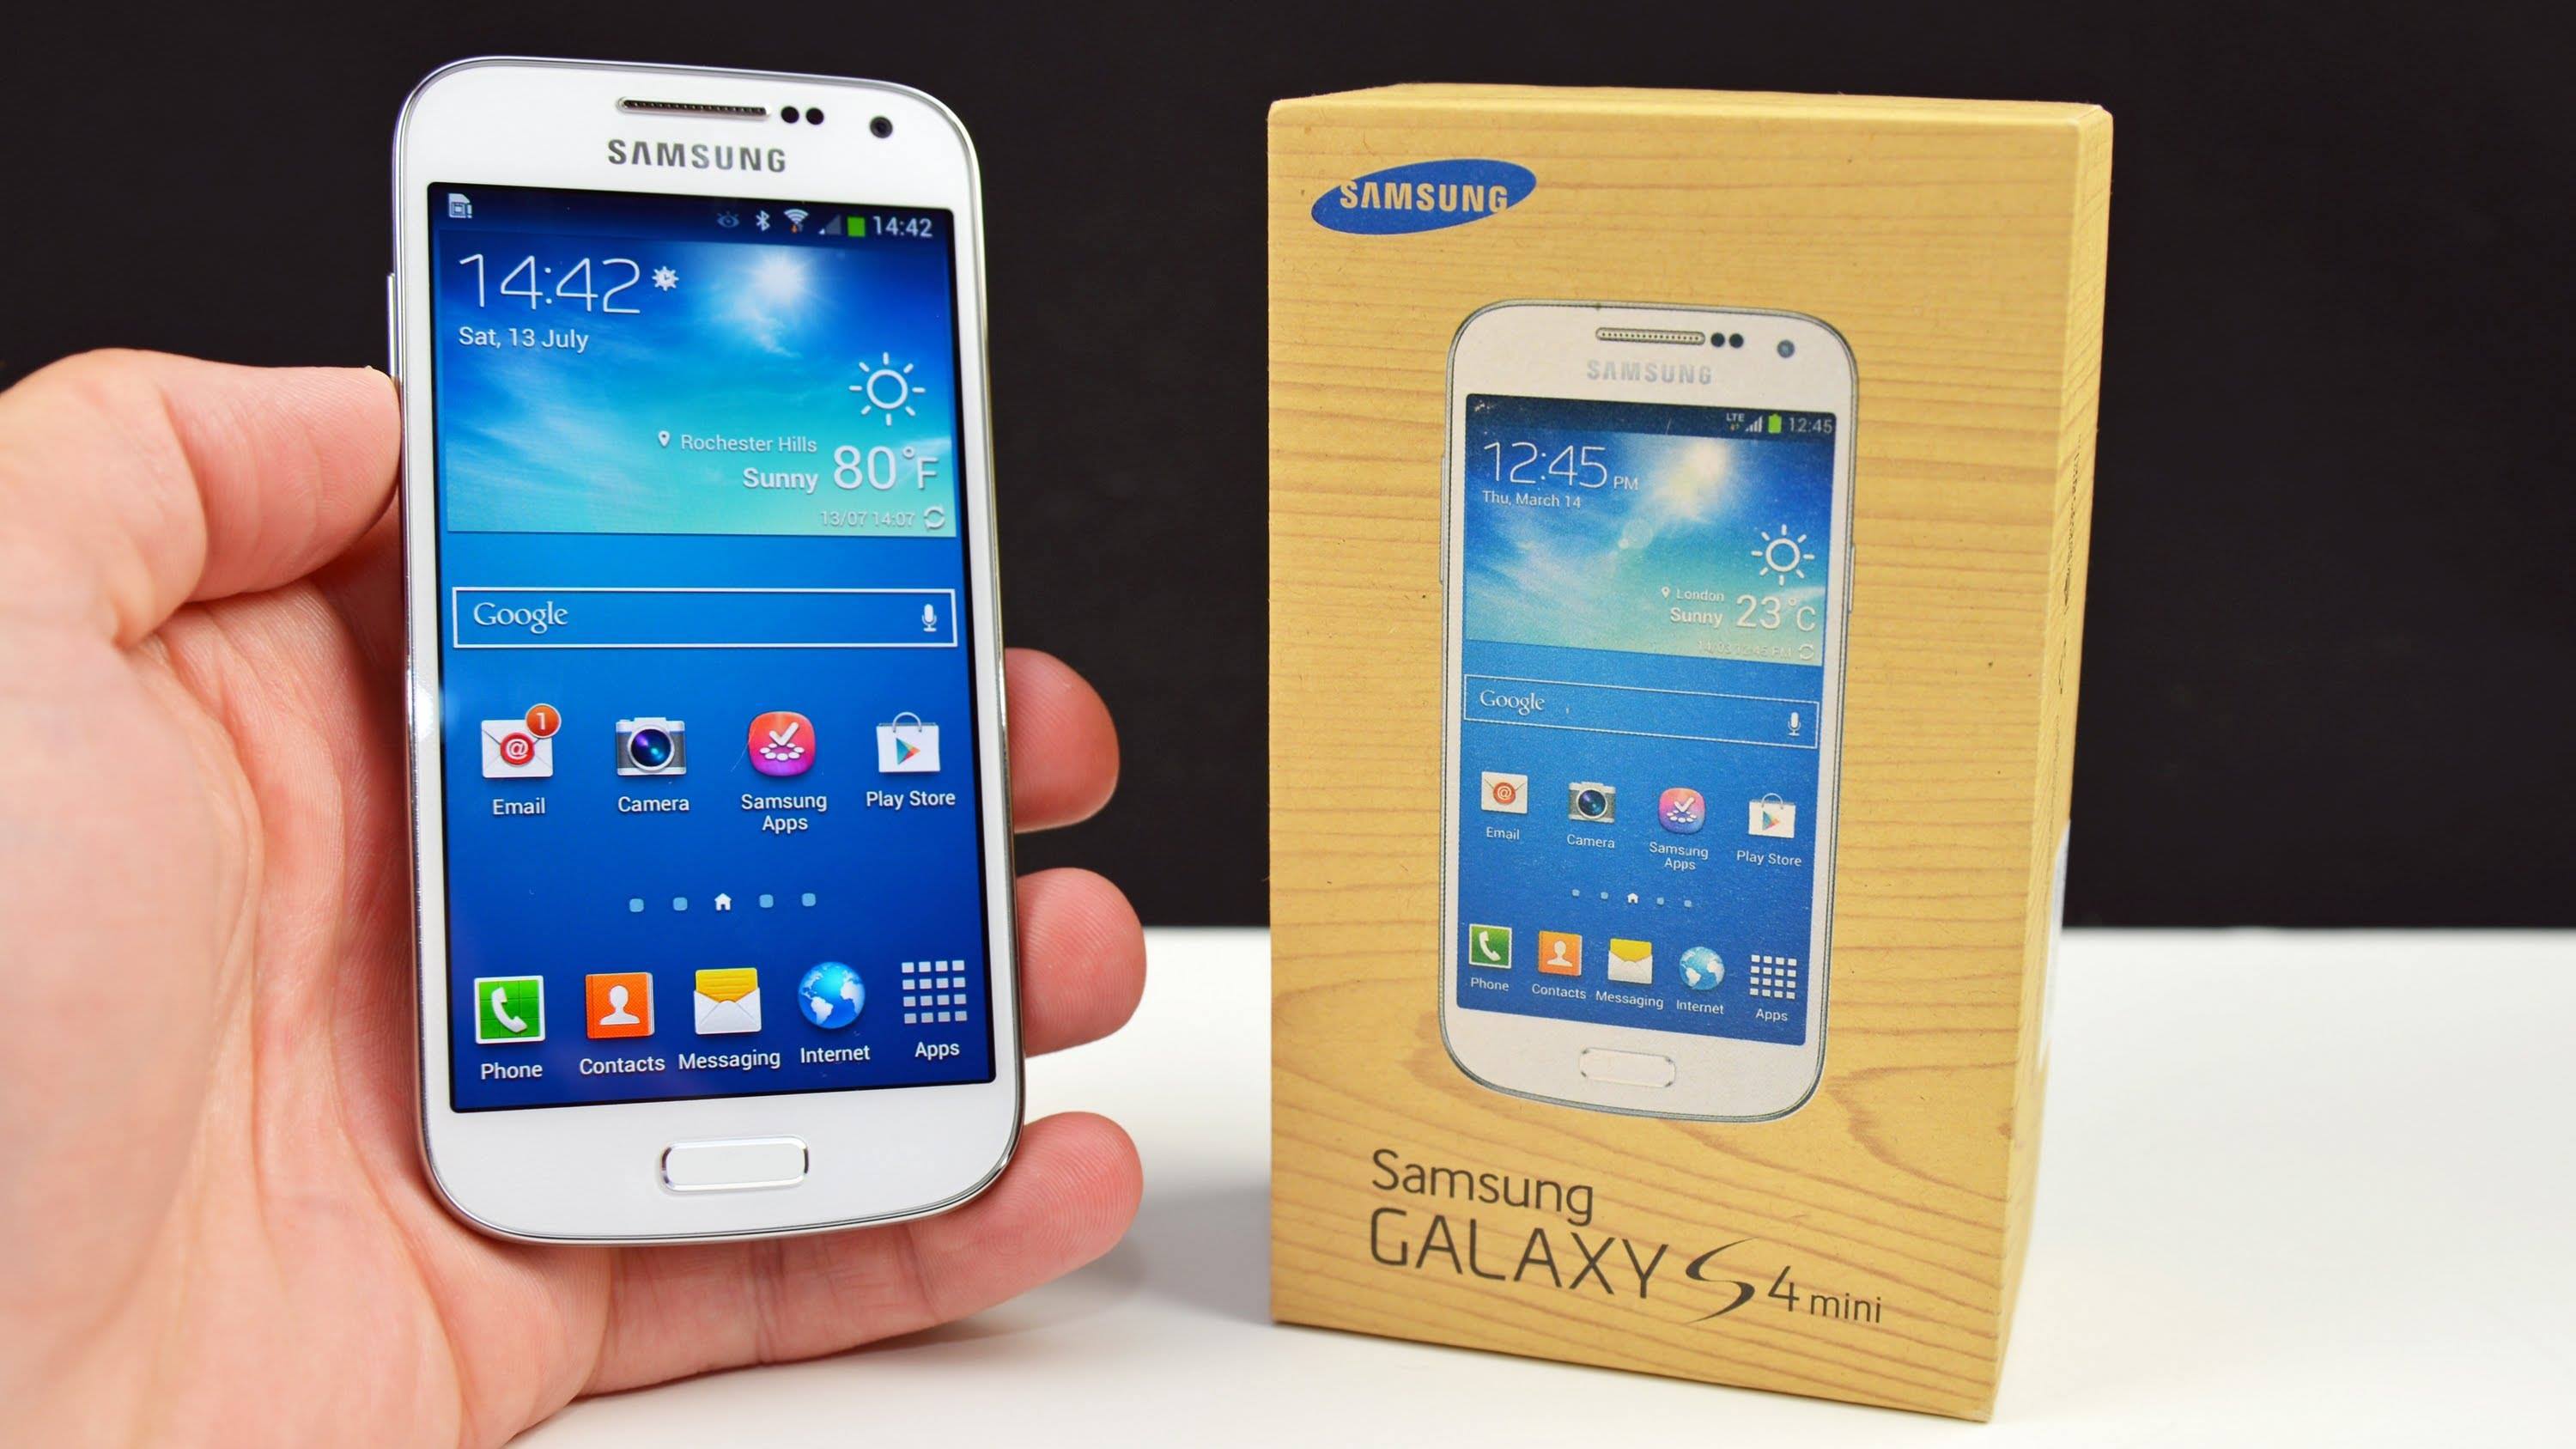 Gt s4 mini. Samsung Galaxy s4 Mini. Samsung Galaxy s4 мини. Samsung Galaxy 4 Mini. Samsung i9190 Galaxy s4 Mini.